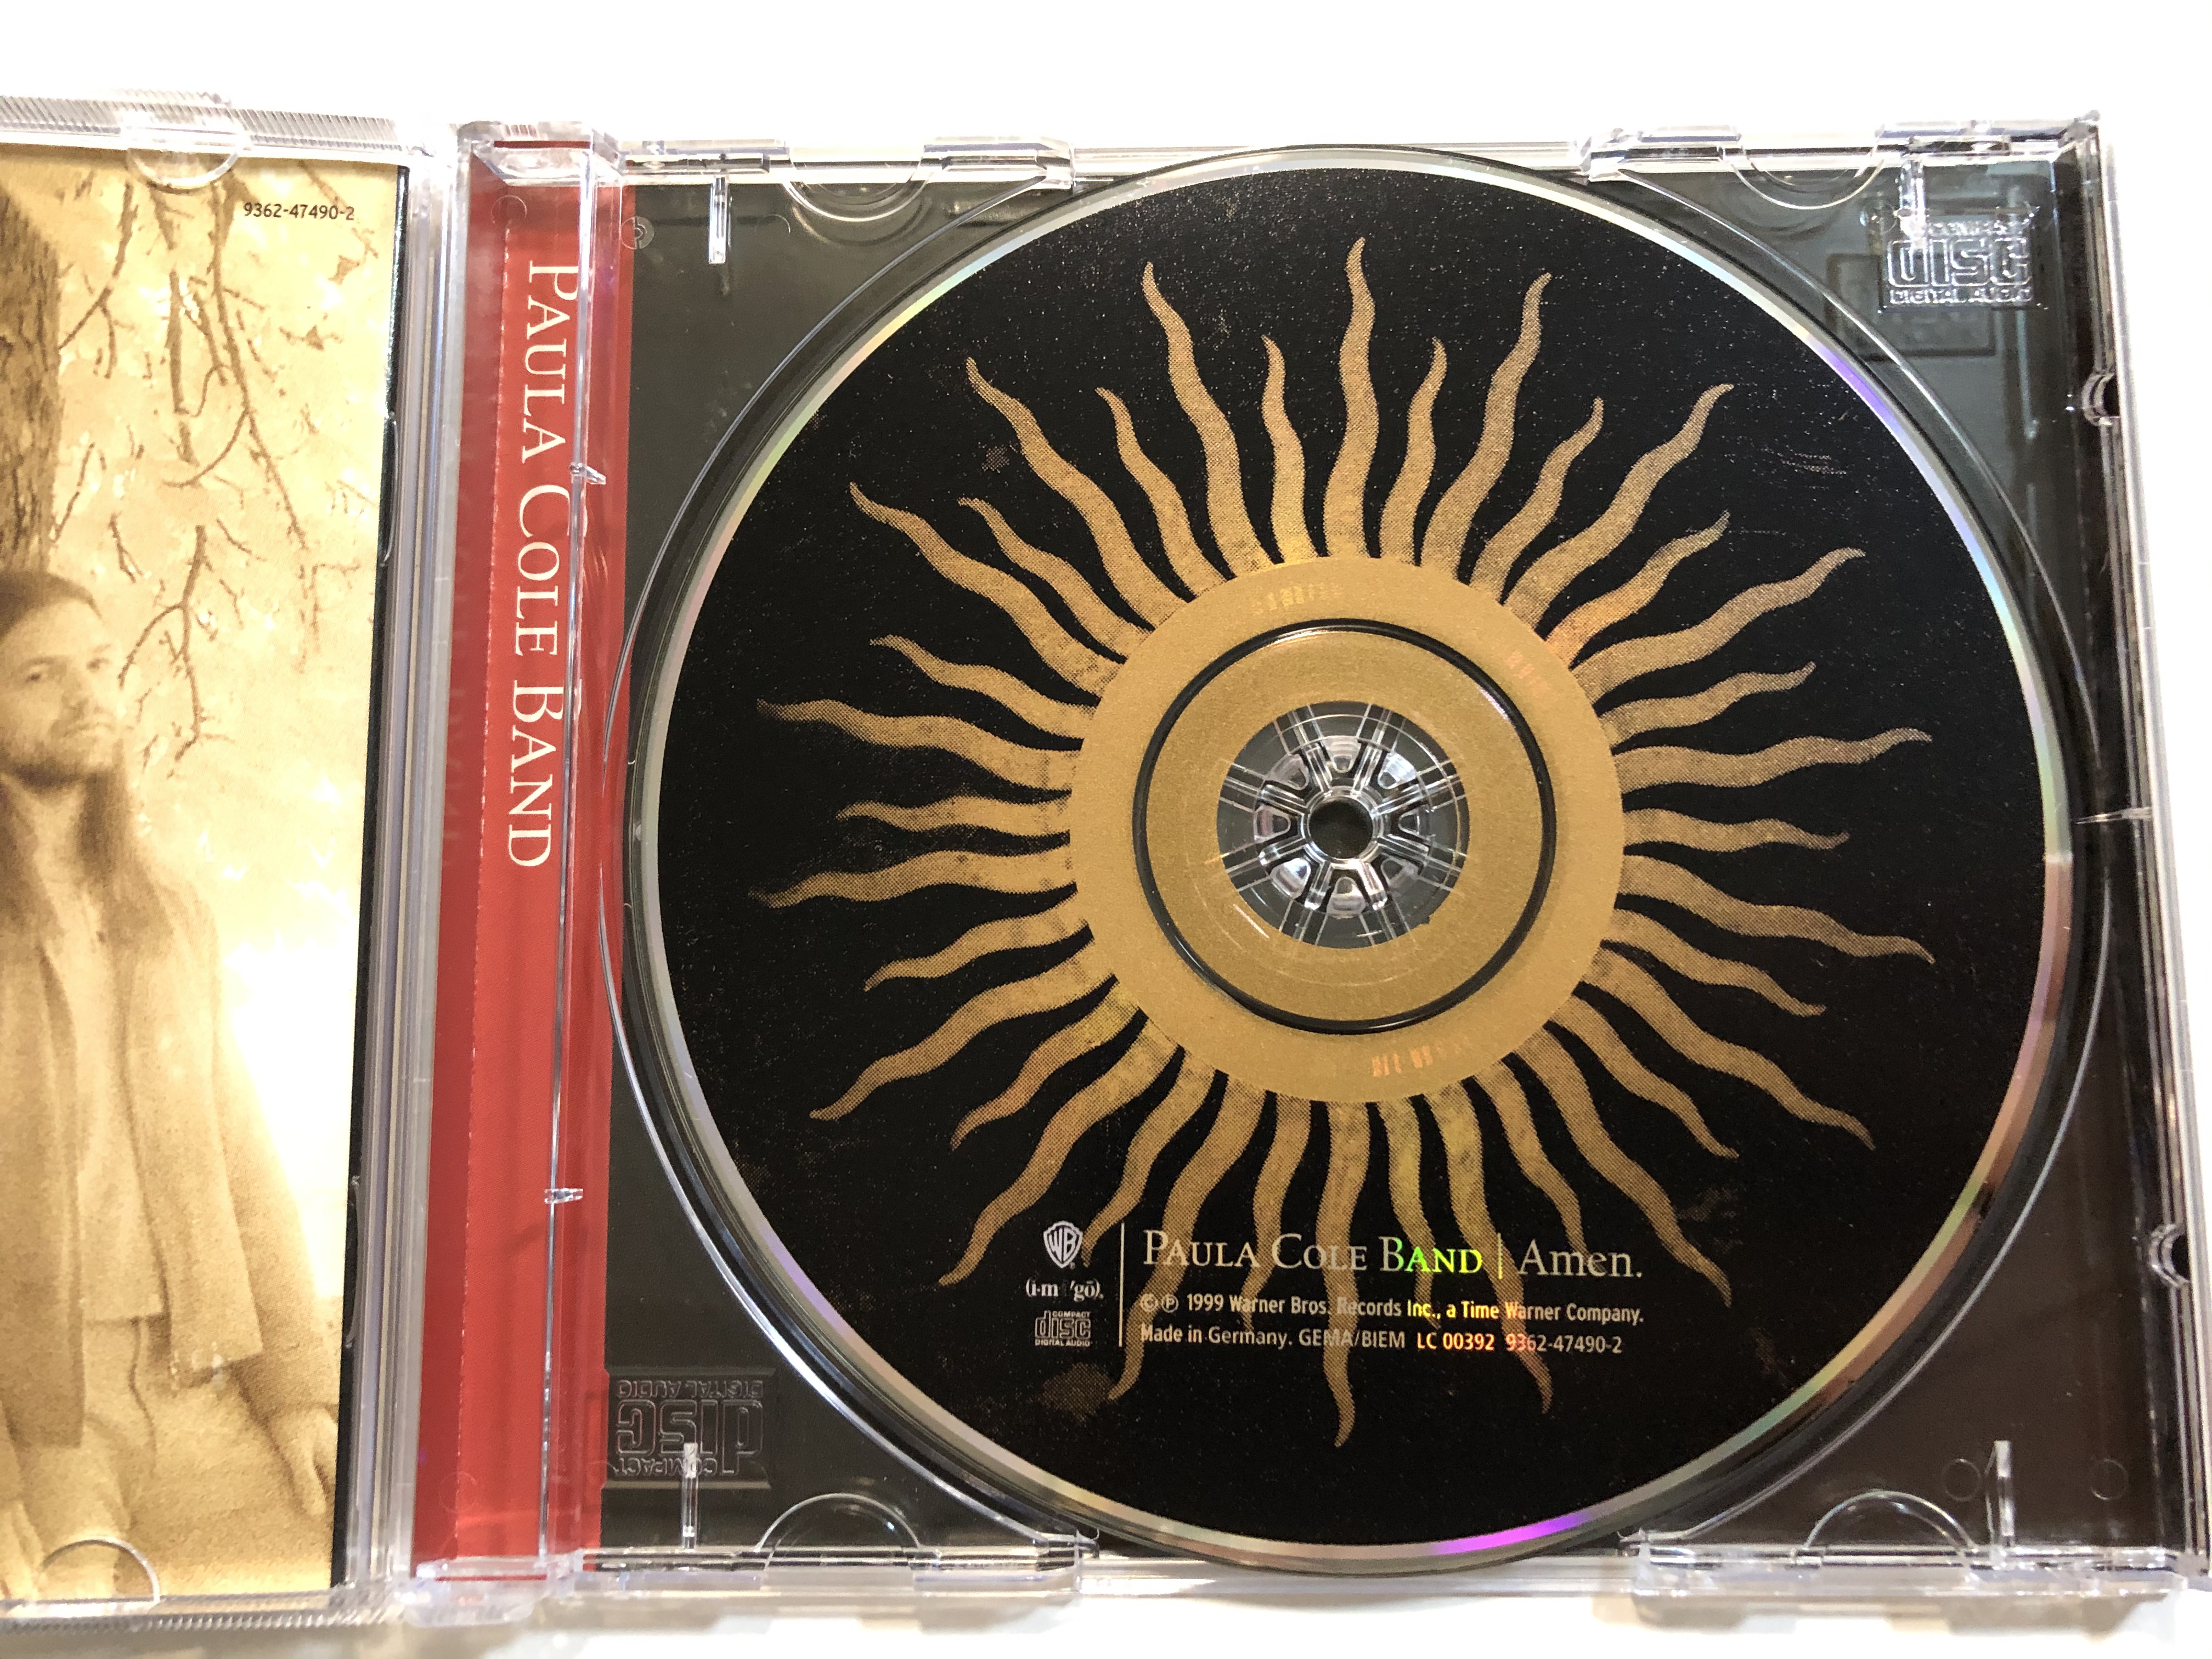 paula-cole-band-amen-imago-audio-cd-1999-9362-47490-2-3-.jpg